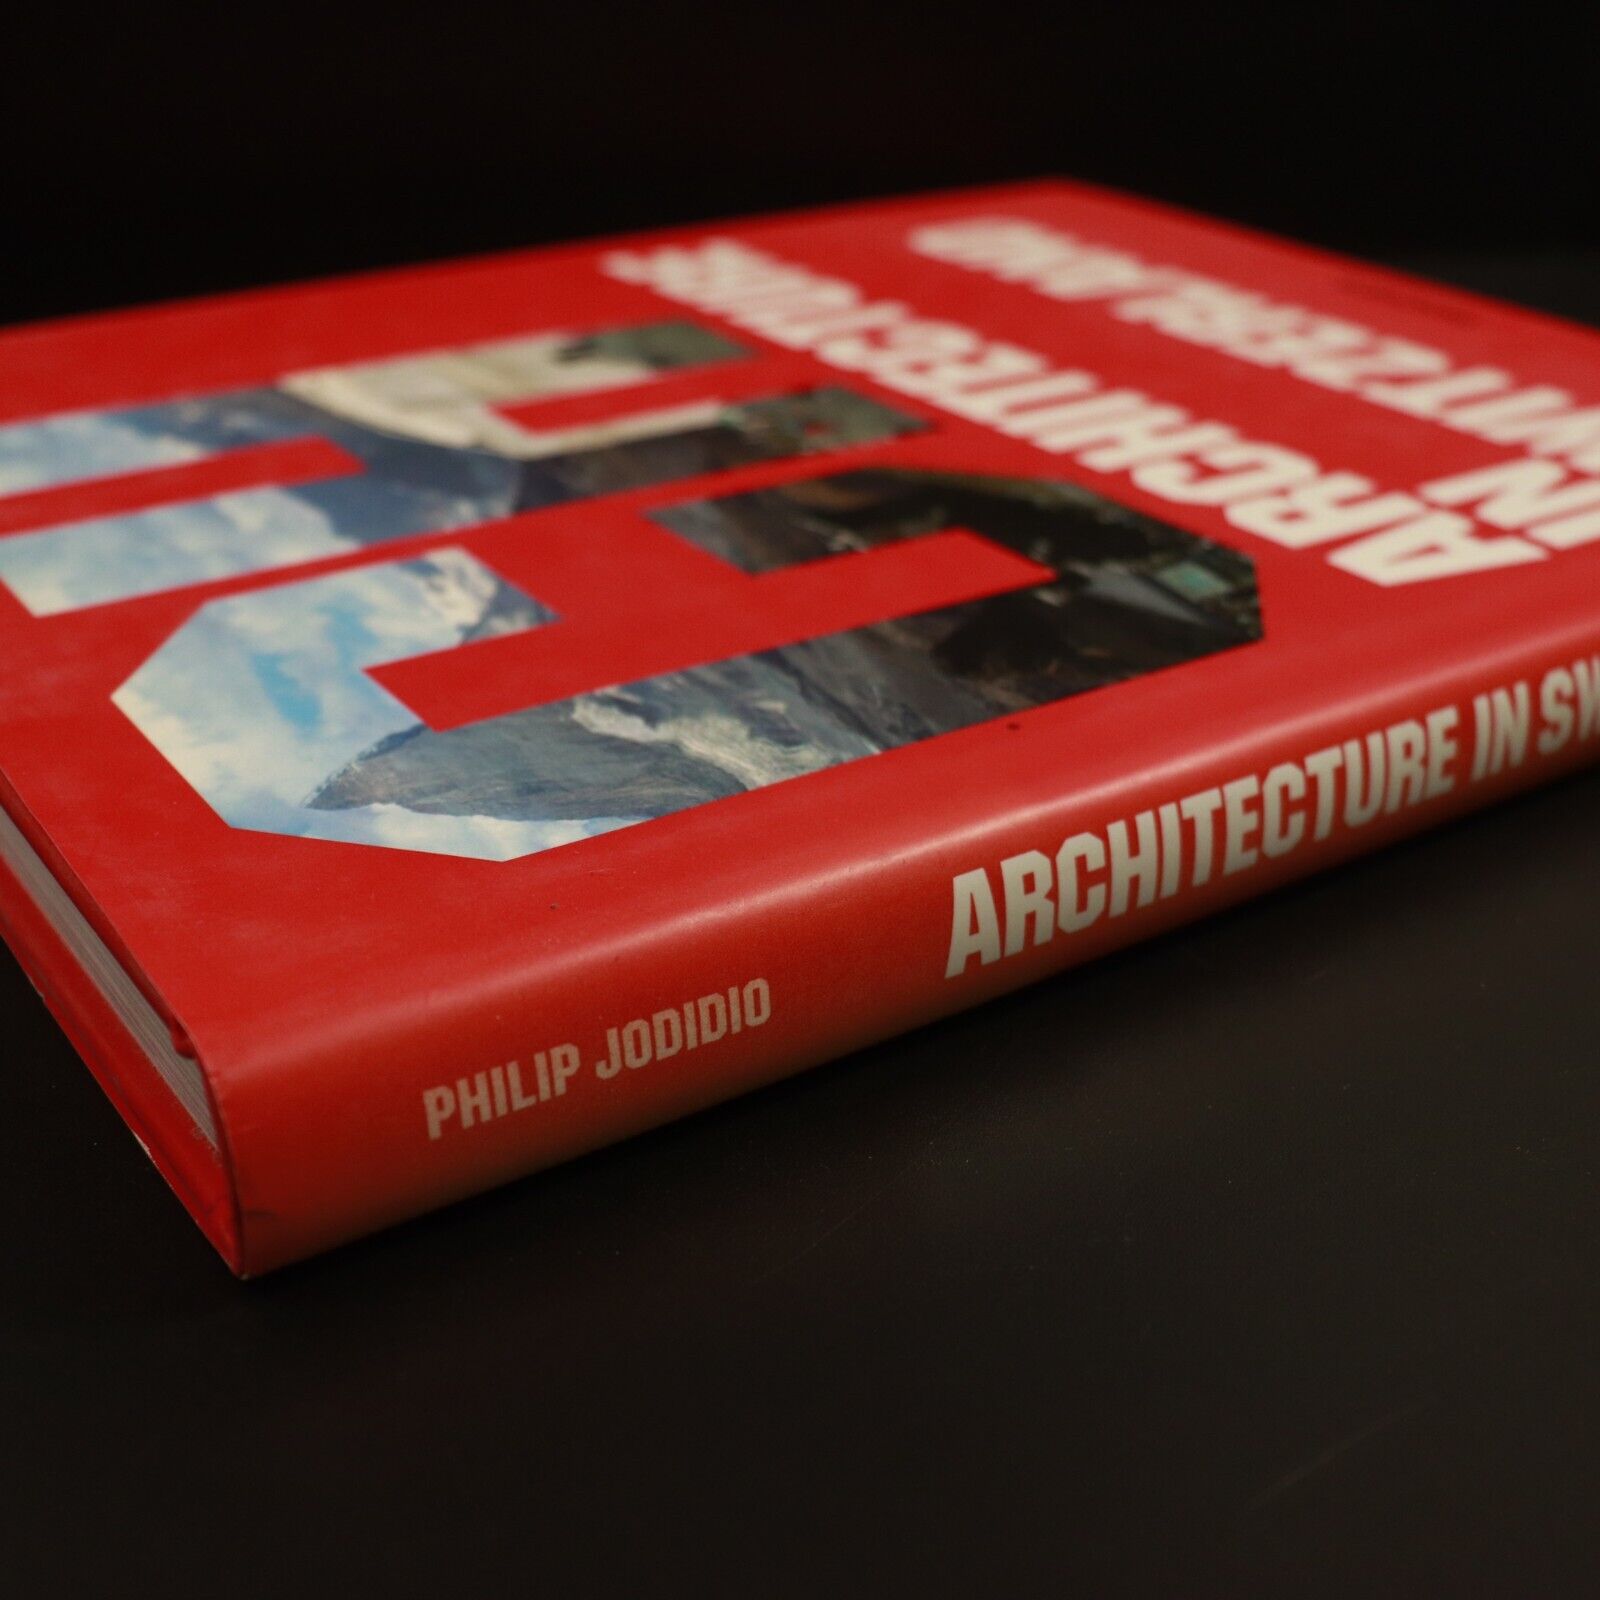 2006 Architecture In Switzerland by Philip Jodidio Architecture Reference Book